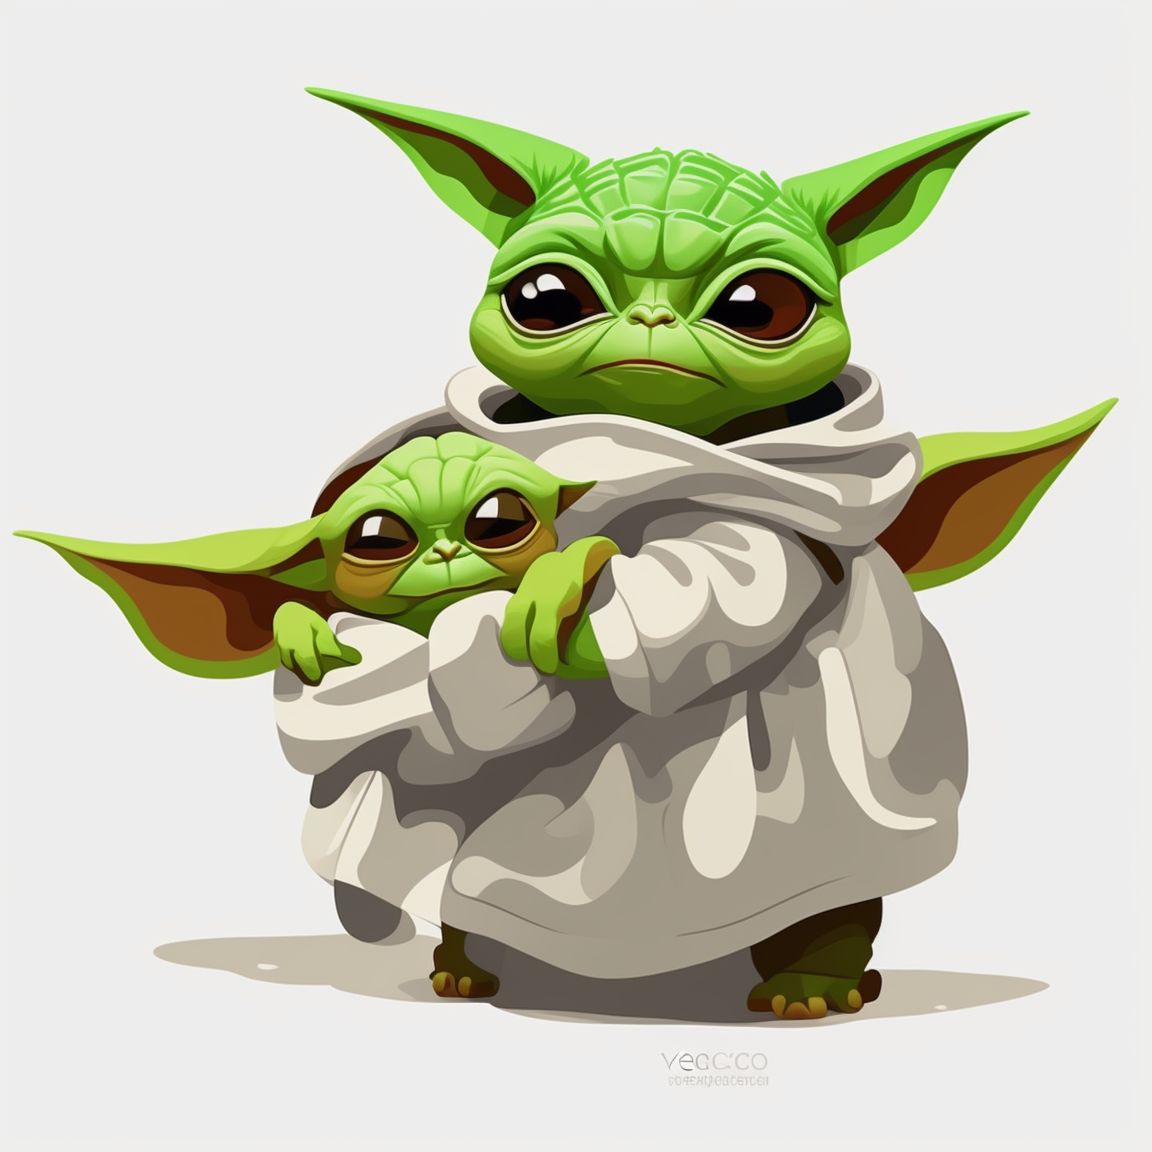 wiry-louse284: Baby Yoda